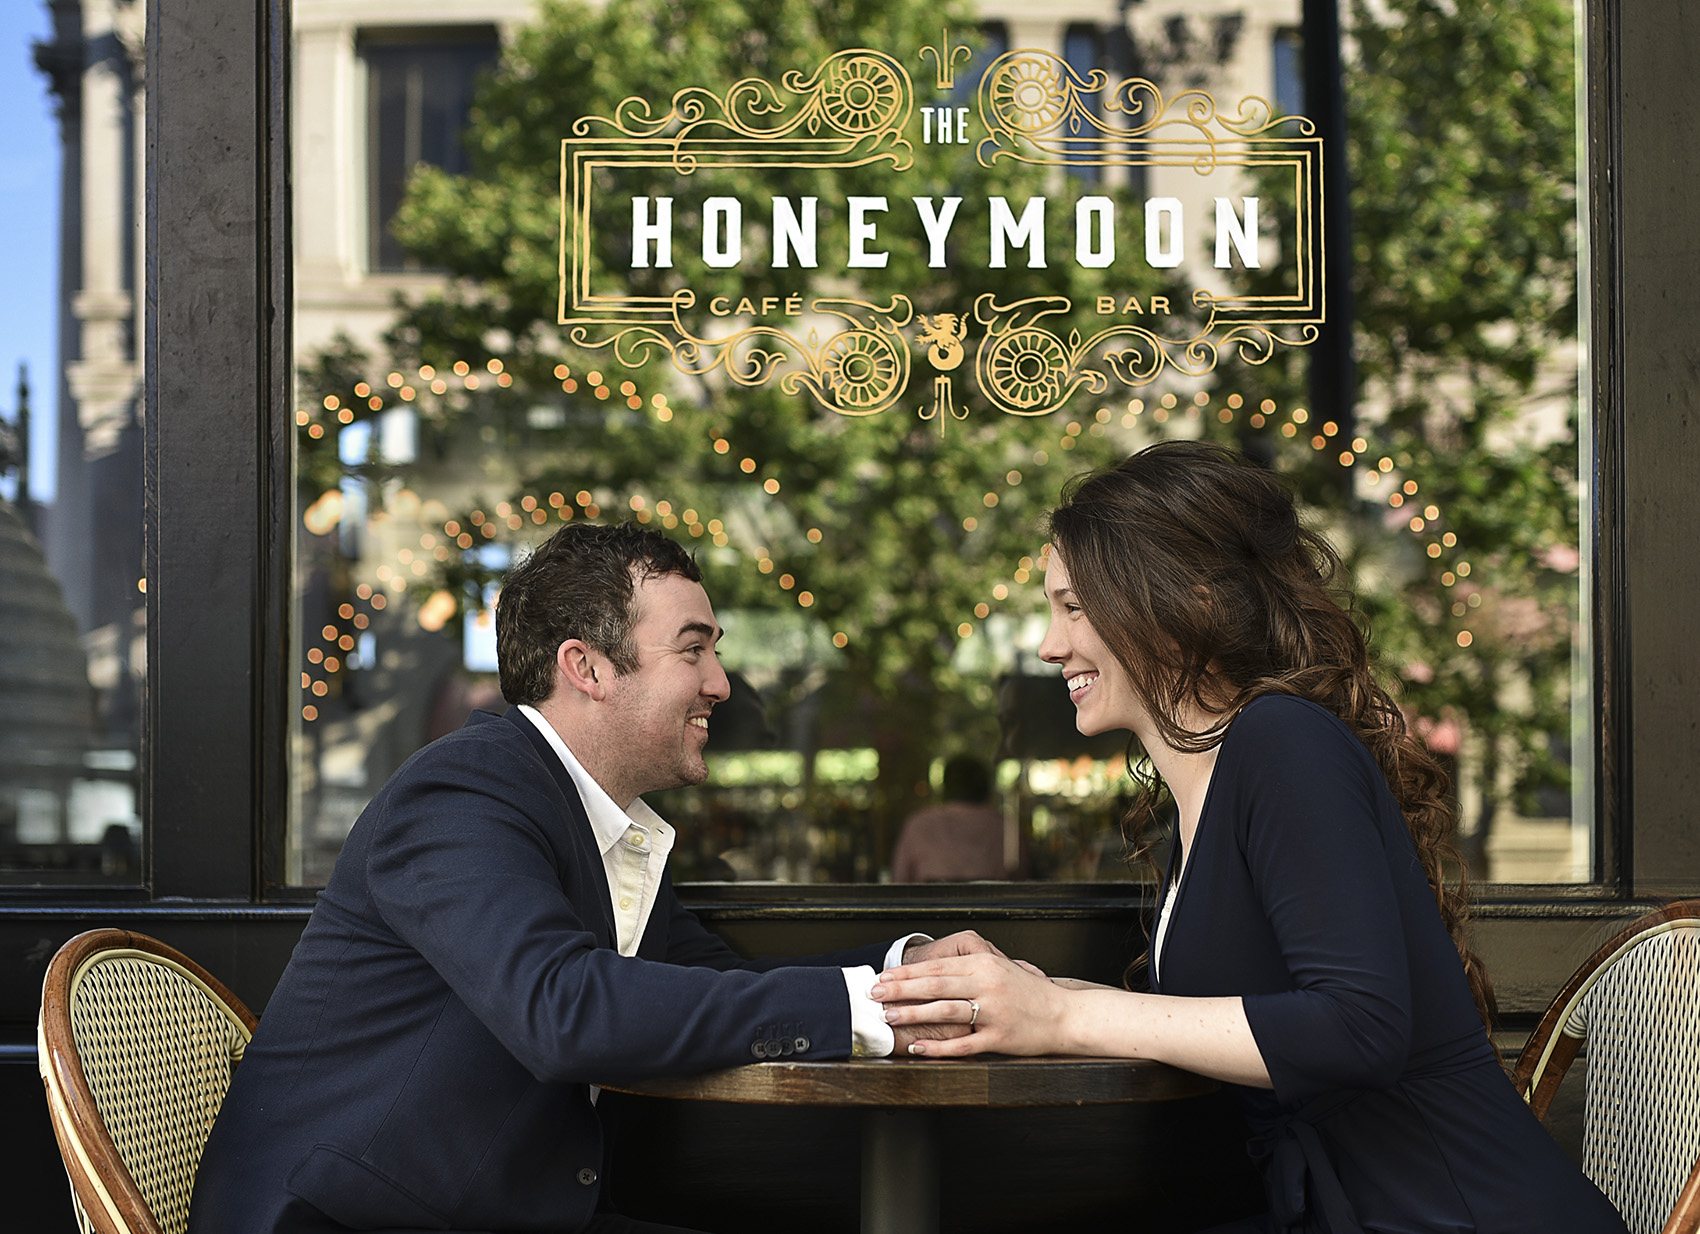 Houston Honeymoon cafe modern classy engagement photography